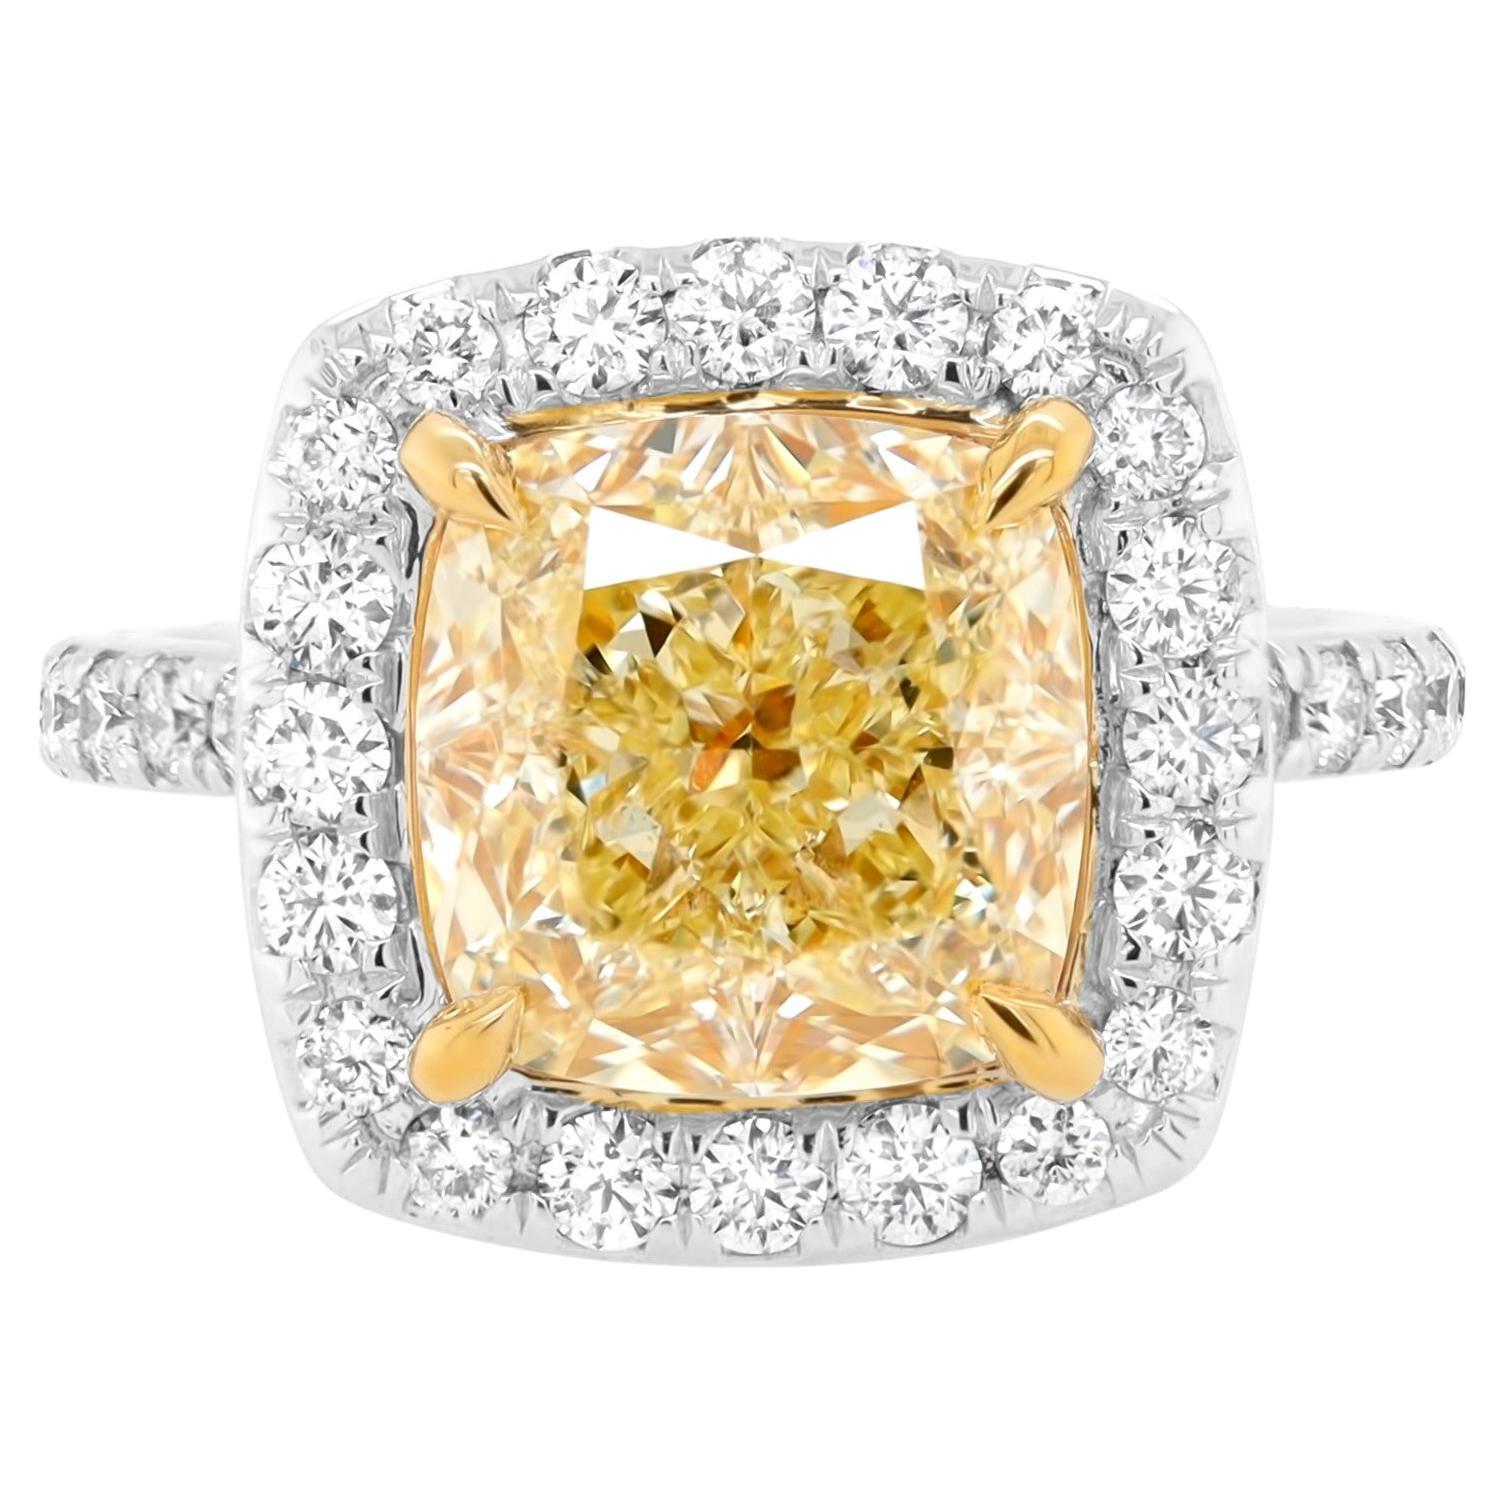 Diana M. 5.01 Carat Fancy Yellow Diamond Platinum Ring